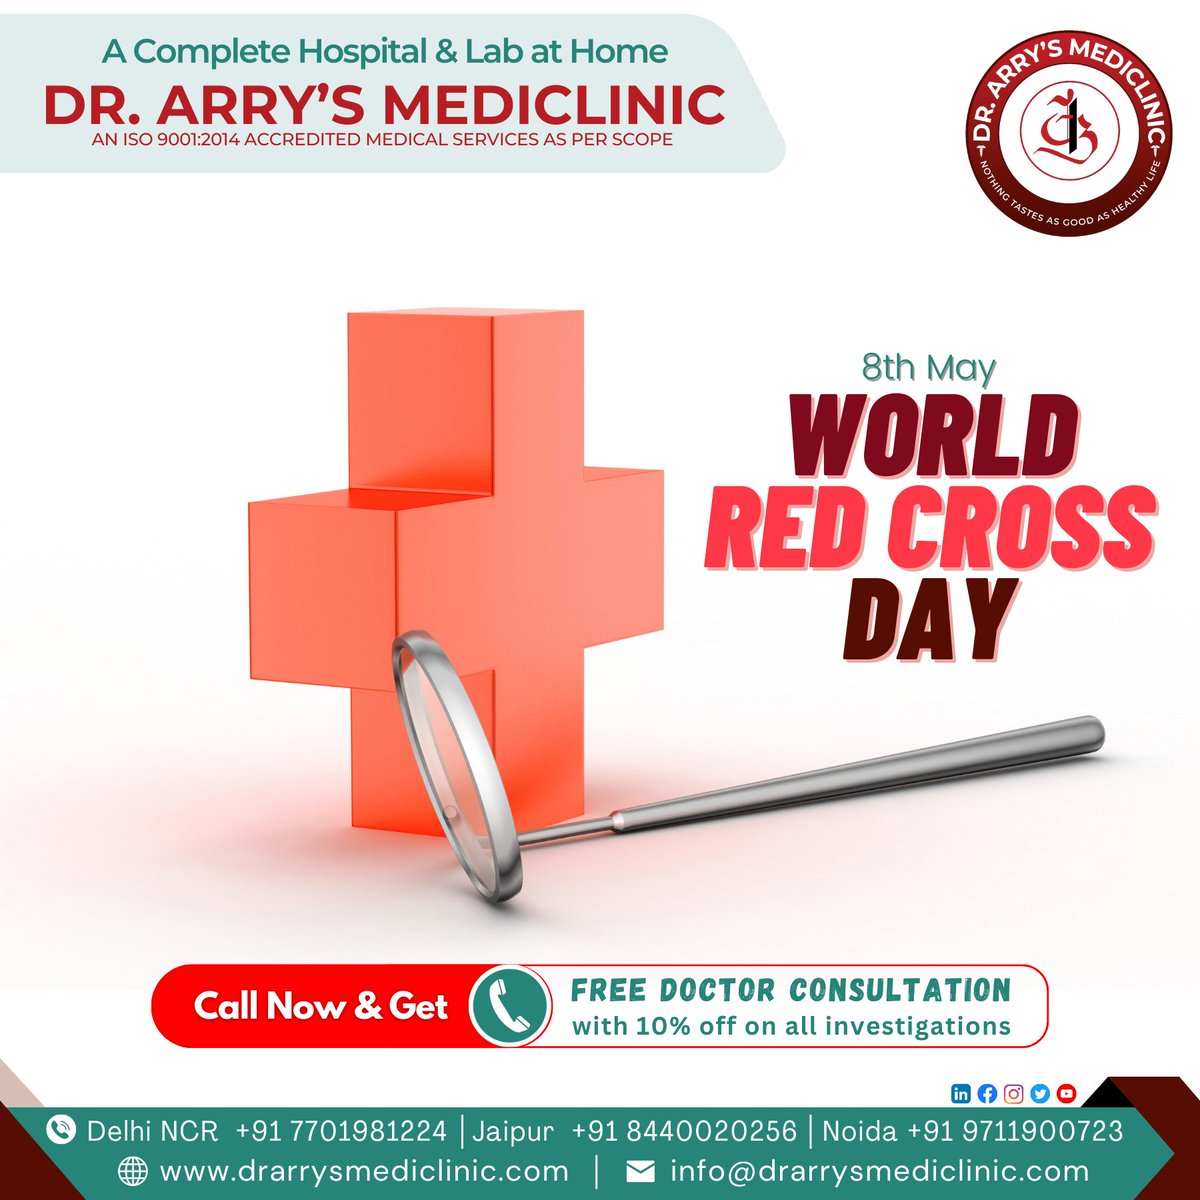 World Red Cross Day 2023

#drarrysmediclinic
#WorldRedCrossDay #RedCrossDay #WorldAsthmaDay #AsthmaAwareness, #BreatheEasy #AsthmaControl #asthmacareforall #drarrysmediclinic #Ambulance #medicinedelivery #Pathologytest #ECG #xray #ABG #echo #mri #ctscan #Ultrasound